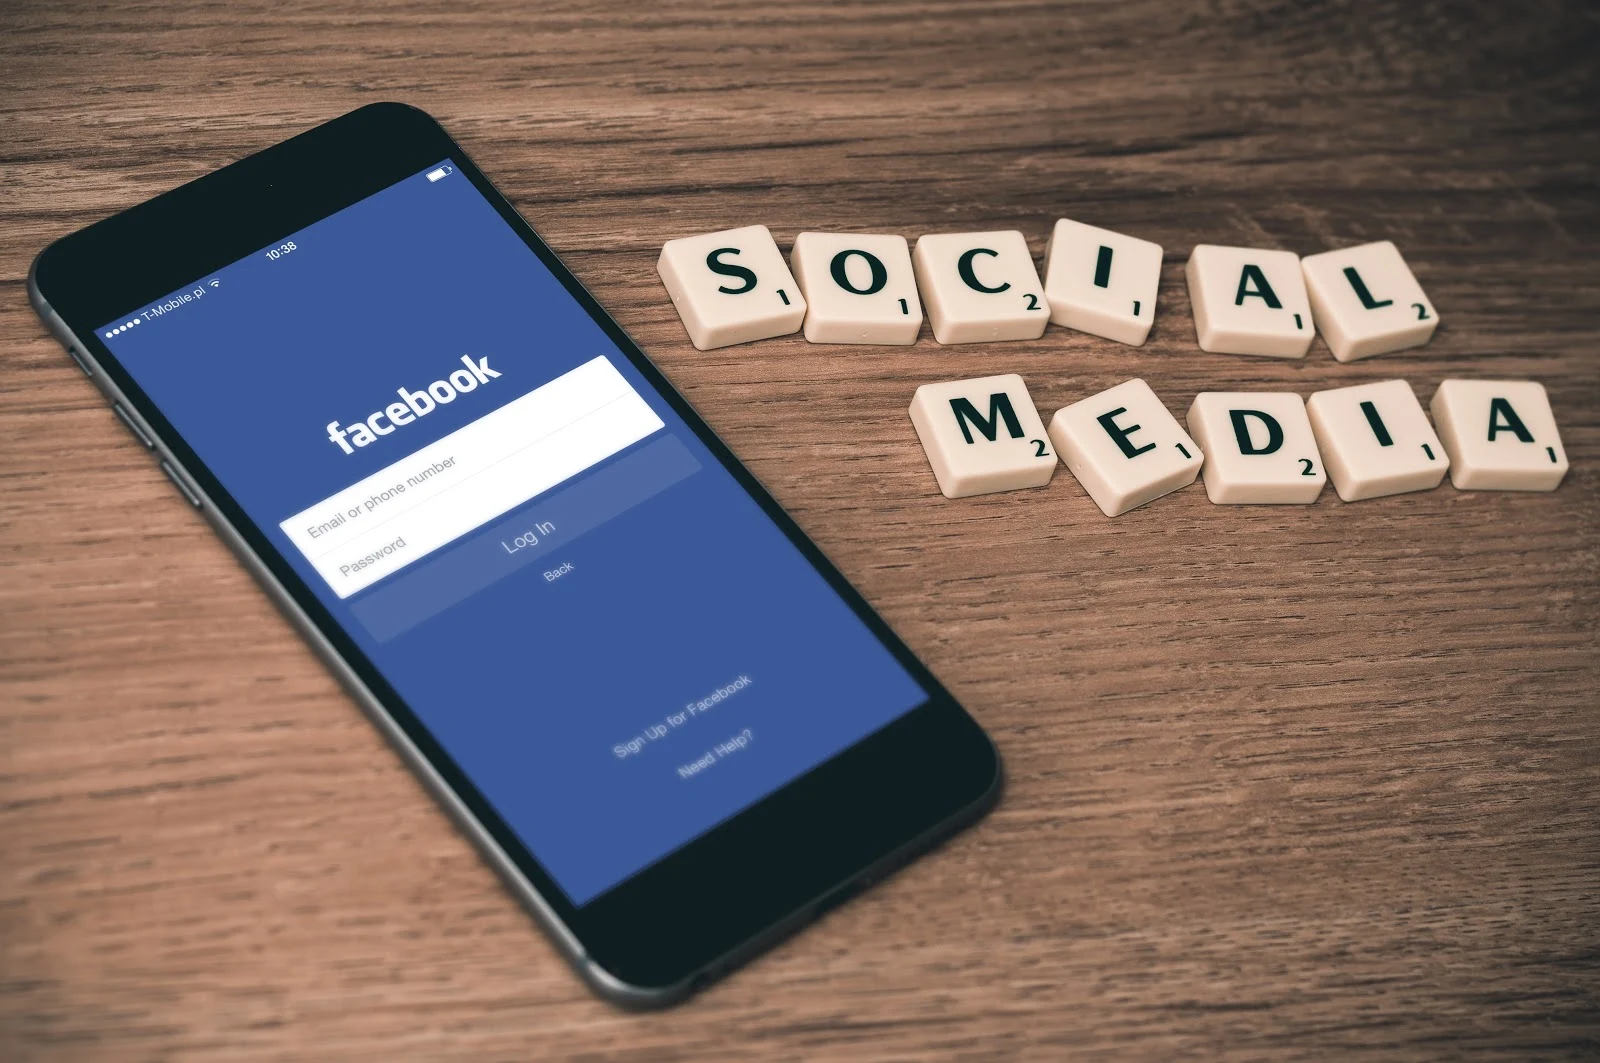 Facebookのログイン画面を映したスマホと「SOCIAL MEDIA」の文字のブロック